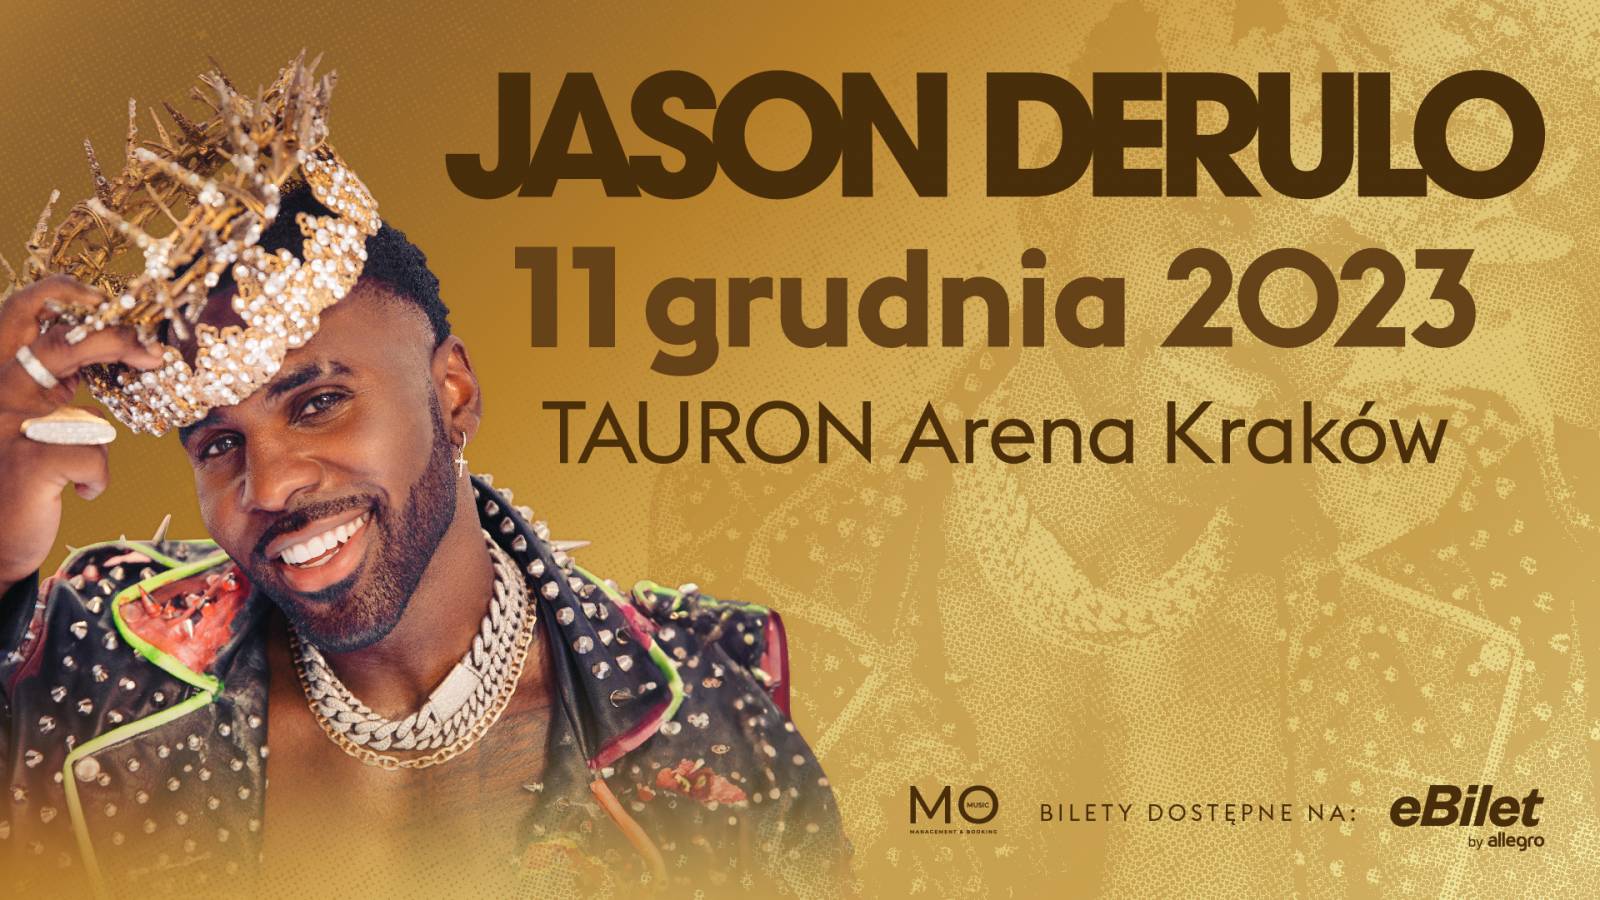 Jason Derulo at Tauron Arena Kraków [CANCELED]